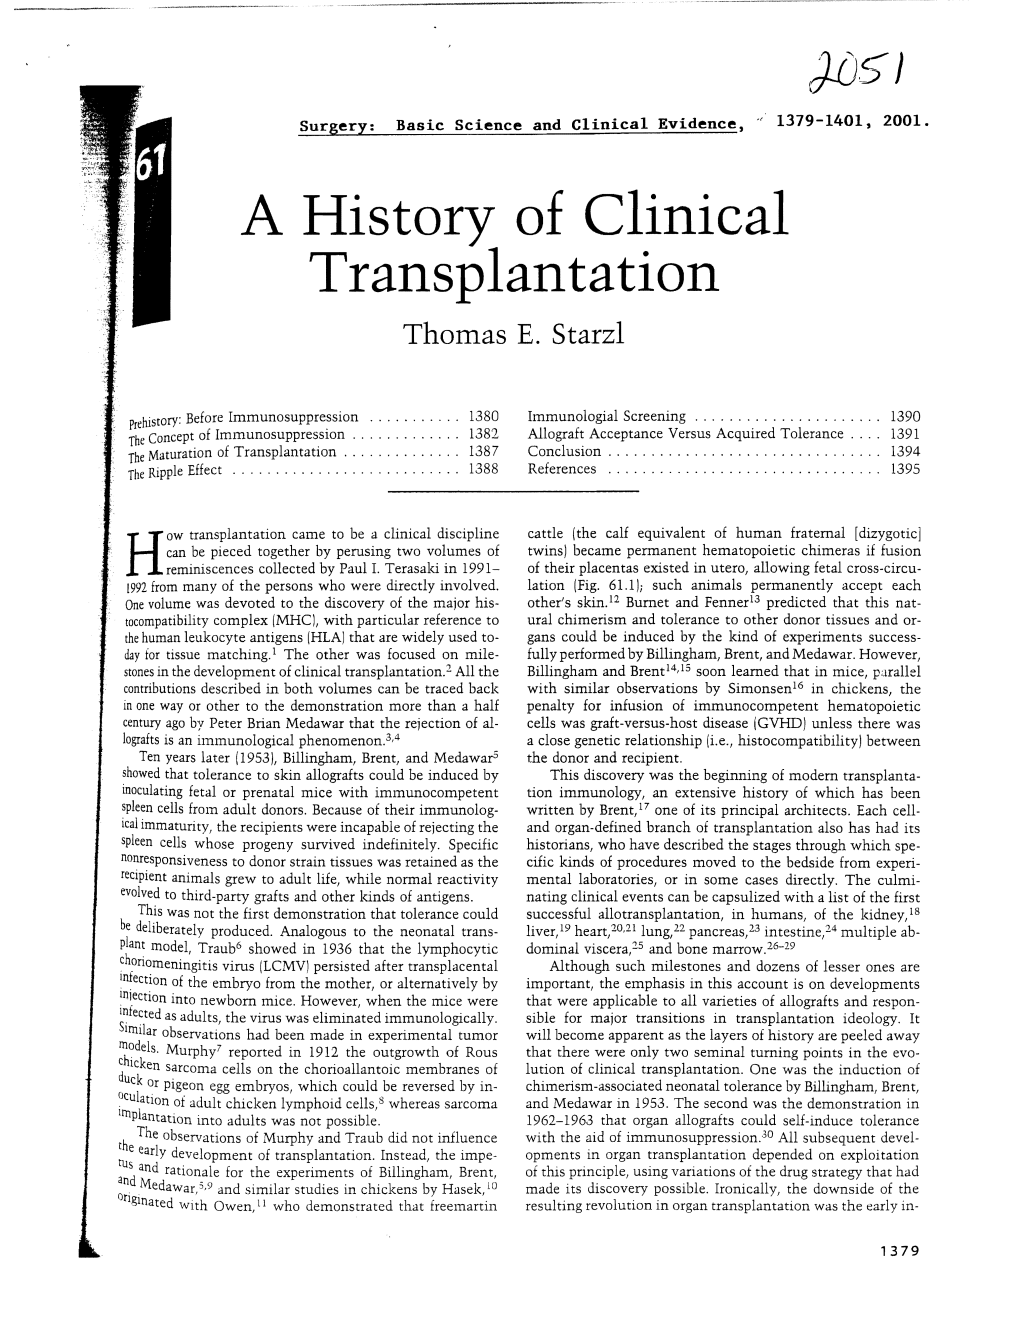 A History of Clinical Transplan Ta Tion Thomas E